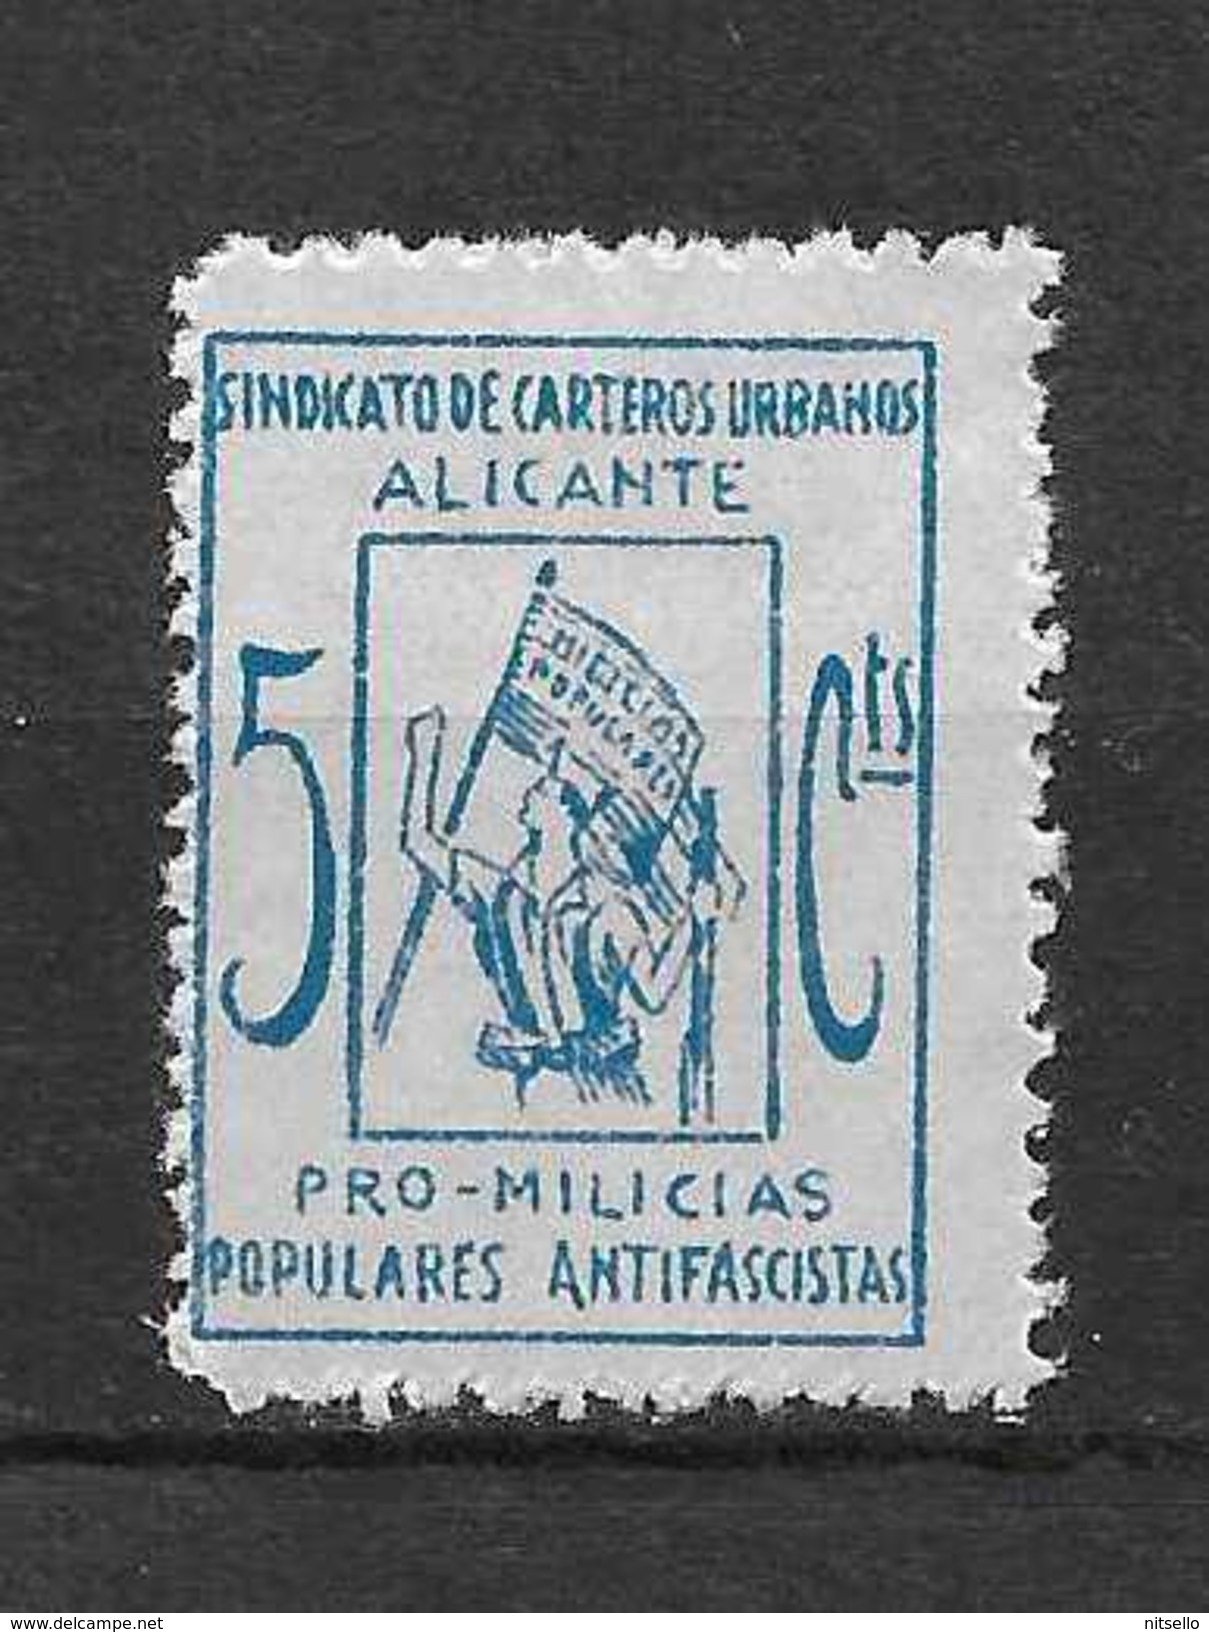 LOTE 2189  ///  (C035)  ESPAÑA  GUERRA CIVIL MILICIAS POPULARES *MH  NUEVO CON CHARNELA - Spanish Civil War Labels